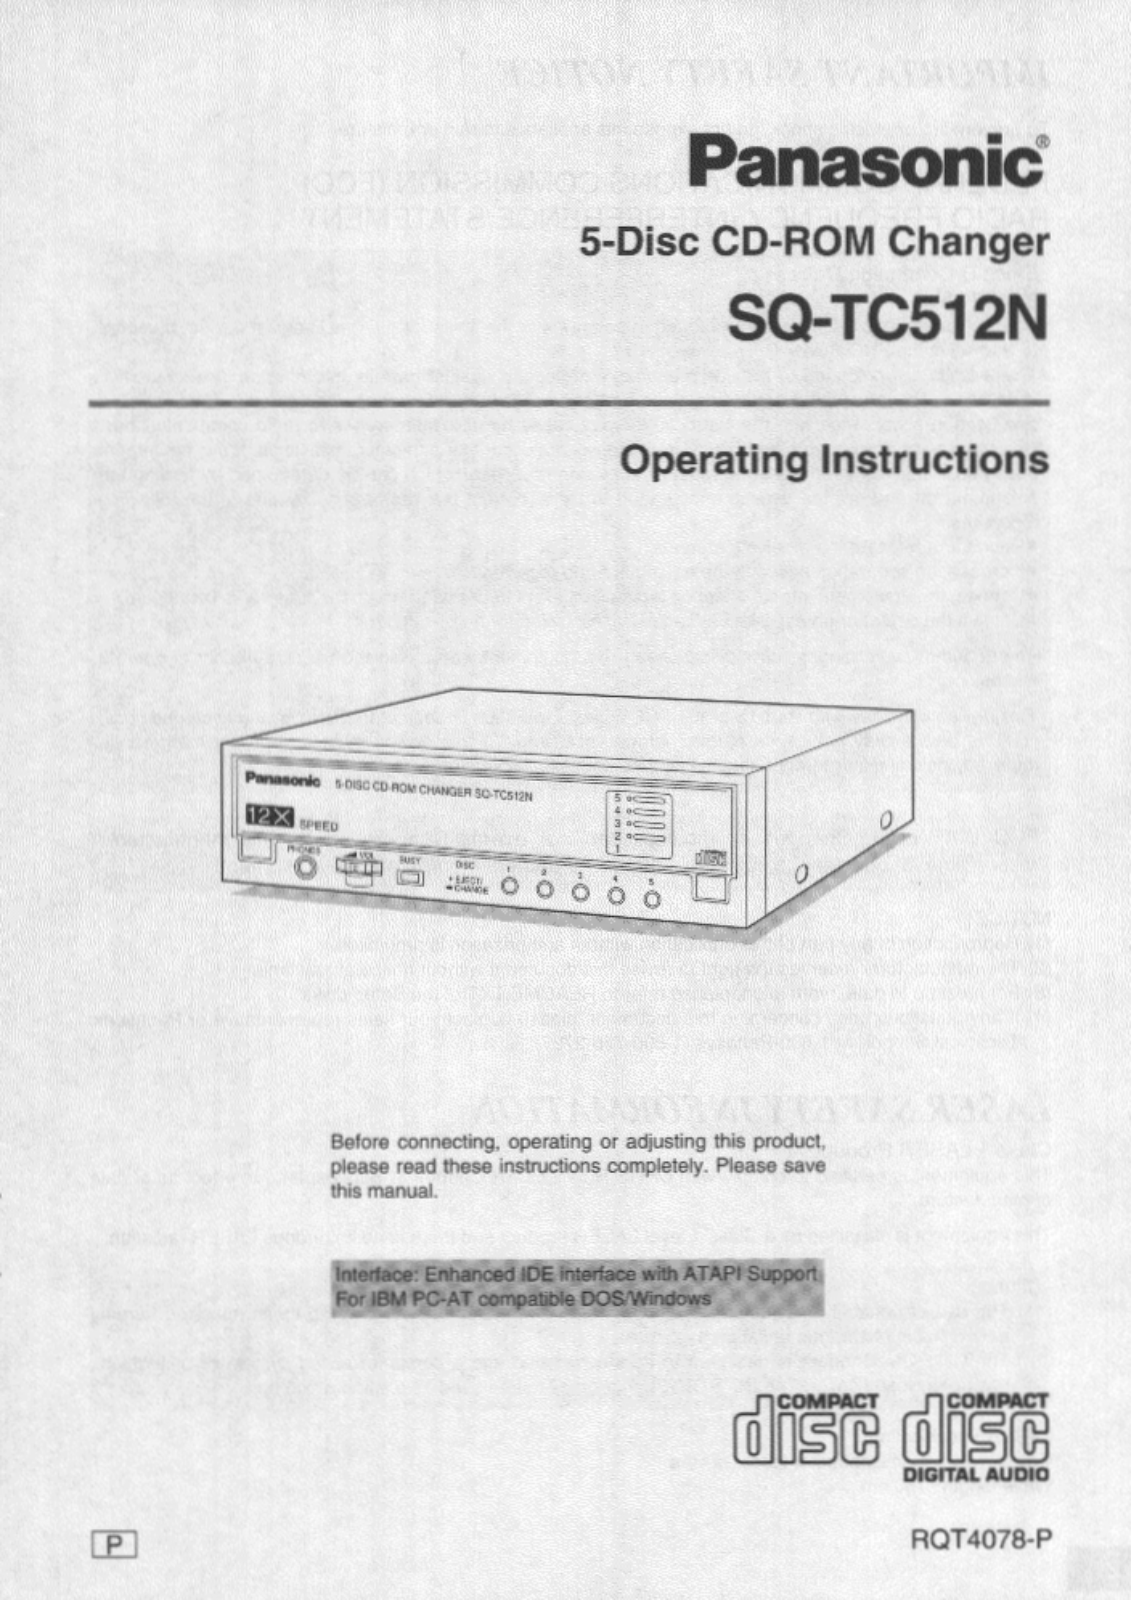 Panasonic sq-tc512 Operation Manual